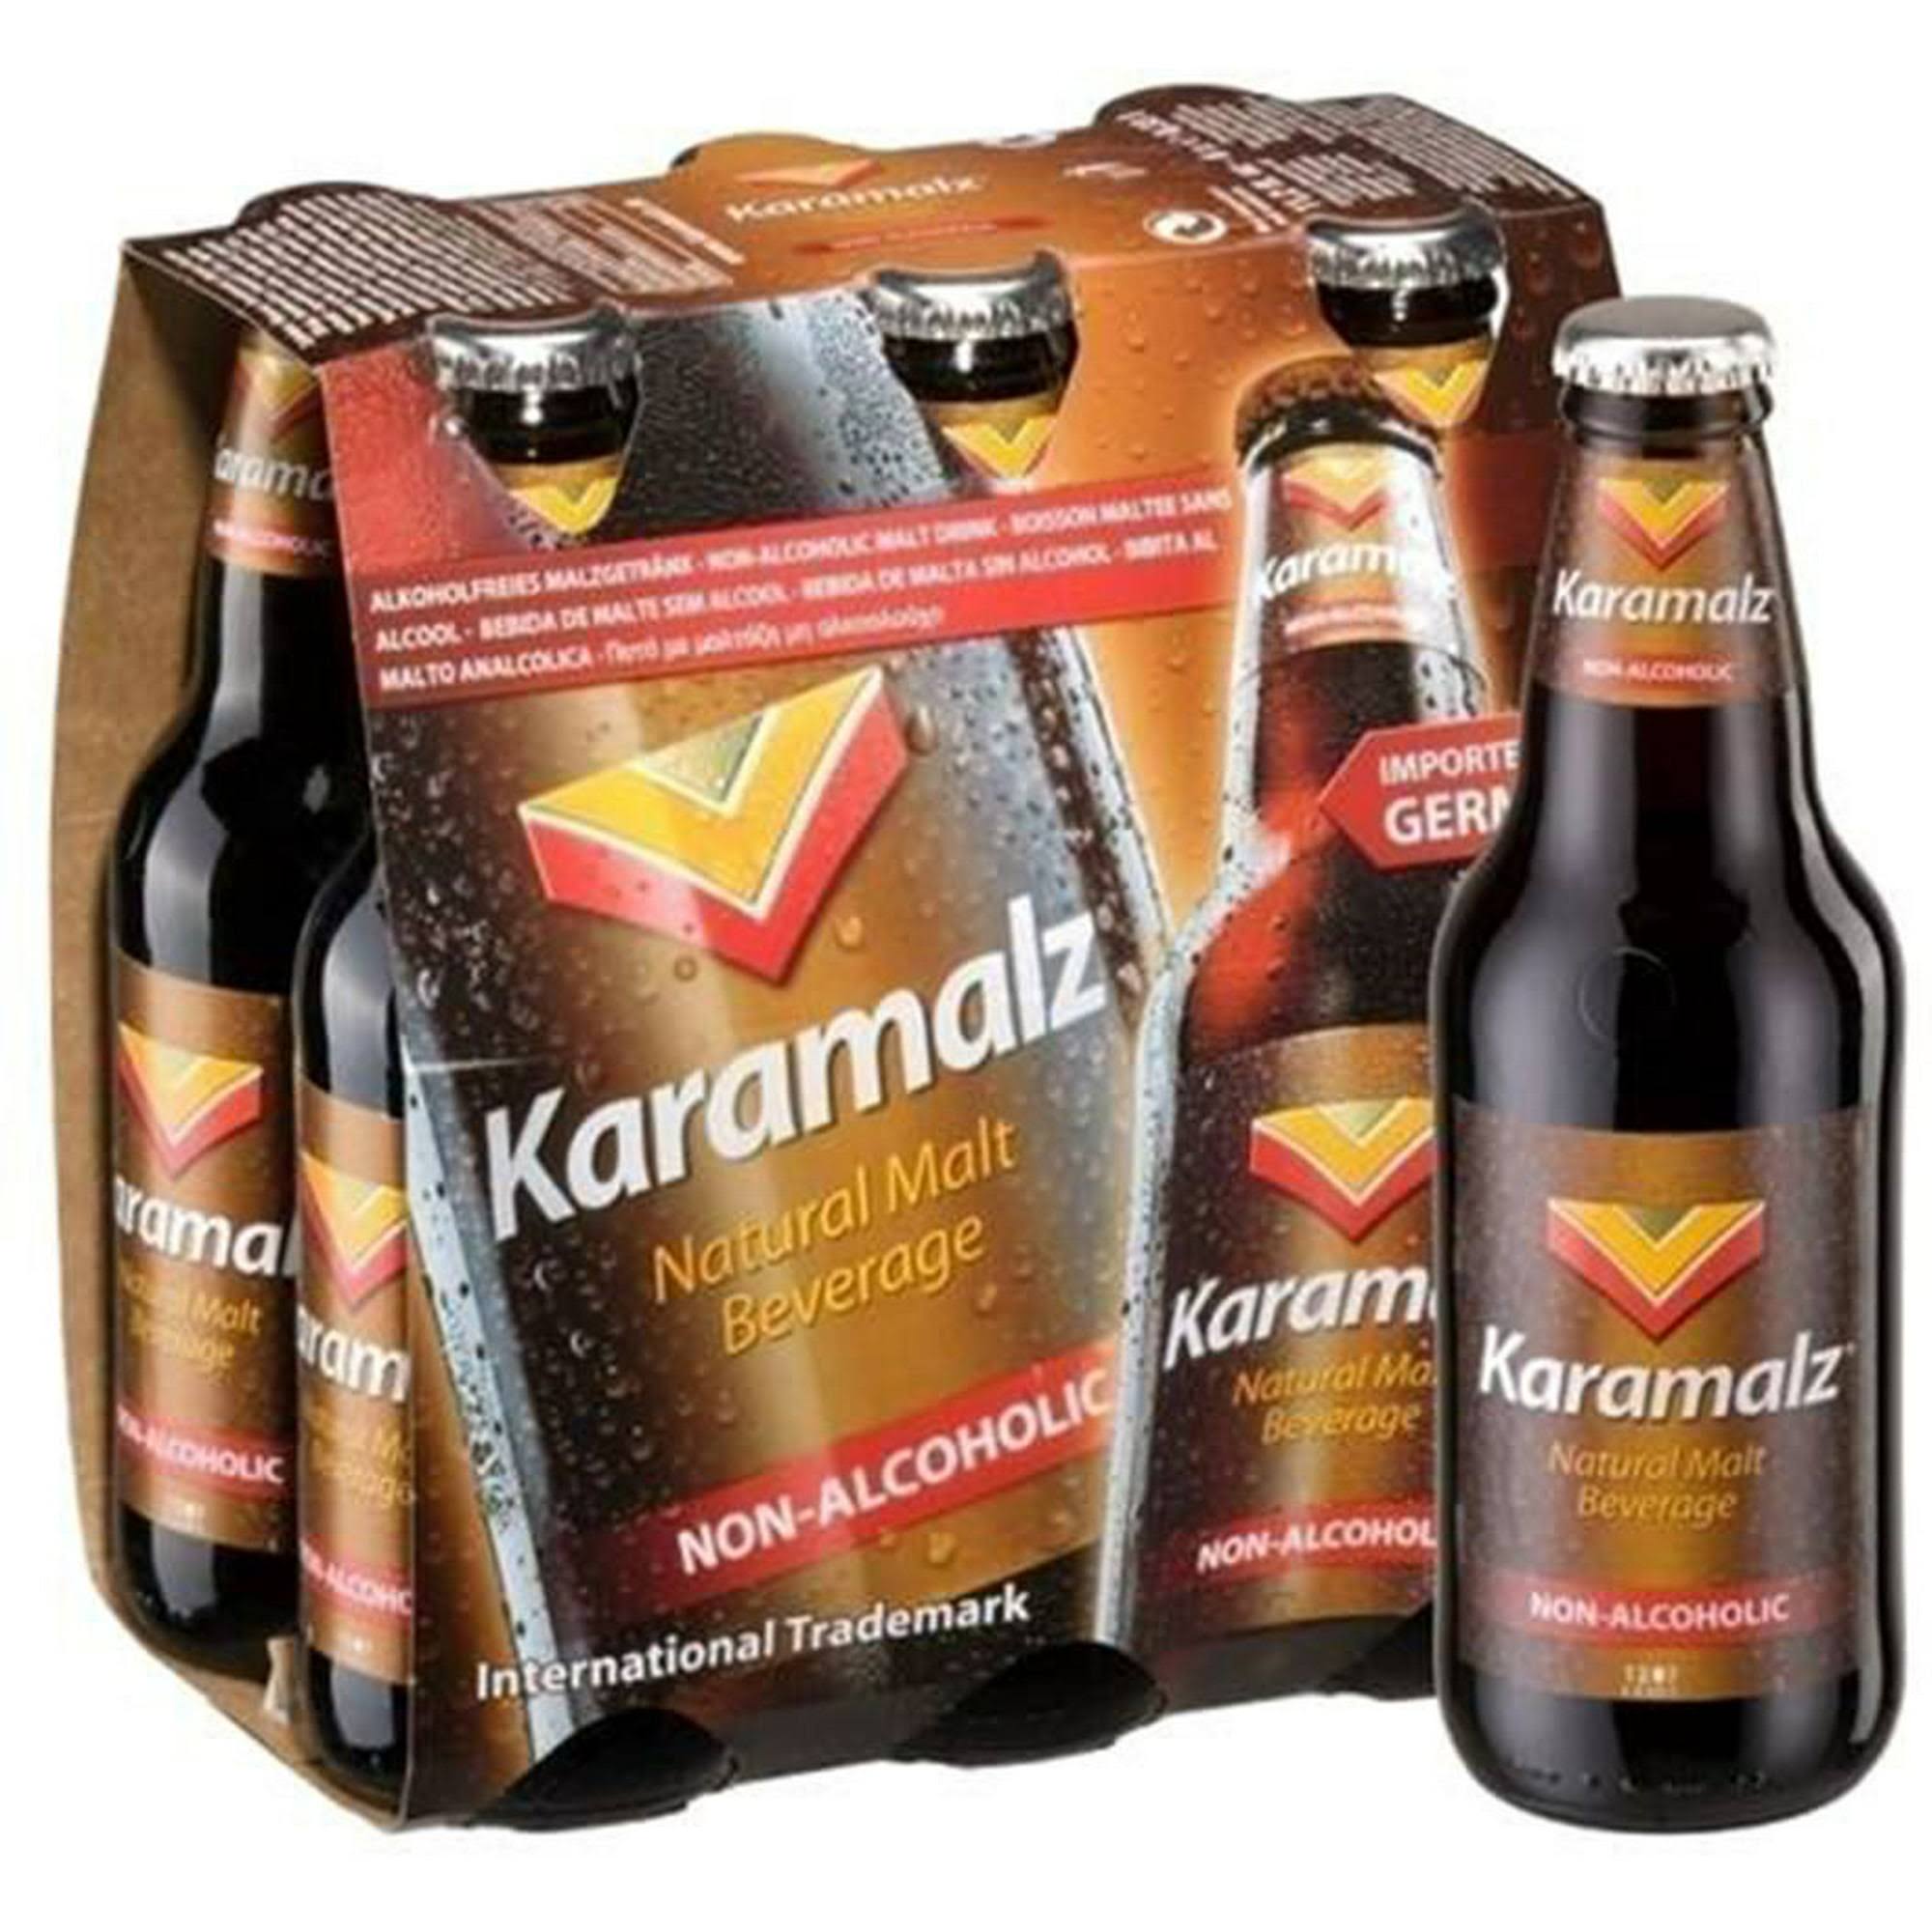 Karamalz Classic Malt Beverage - 330ml, 6 Bottles